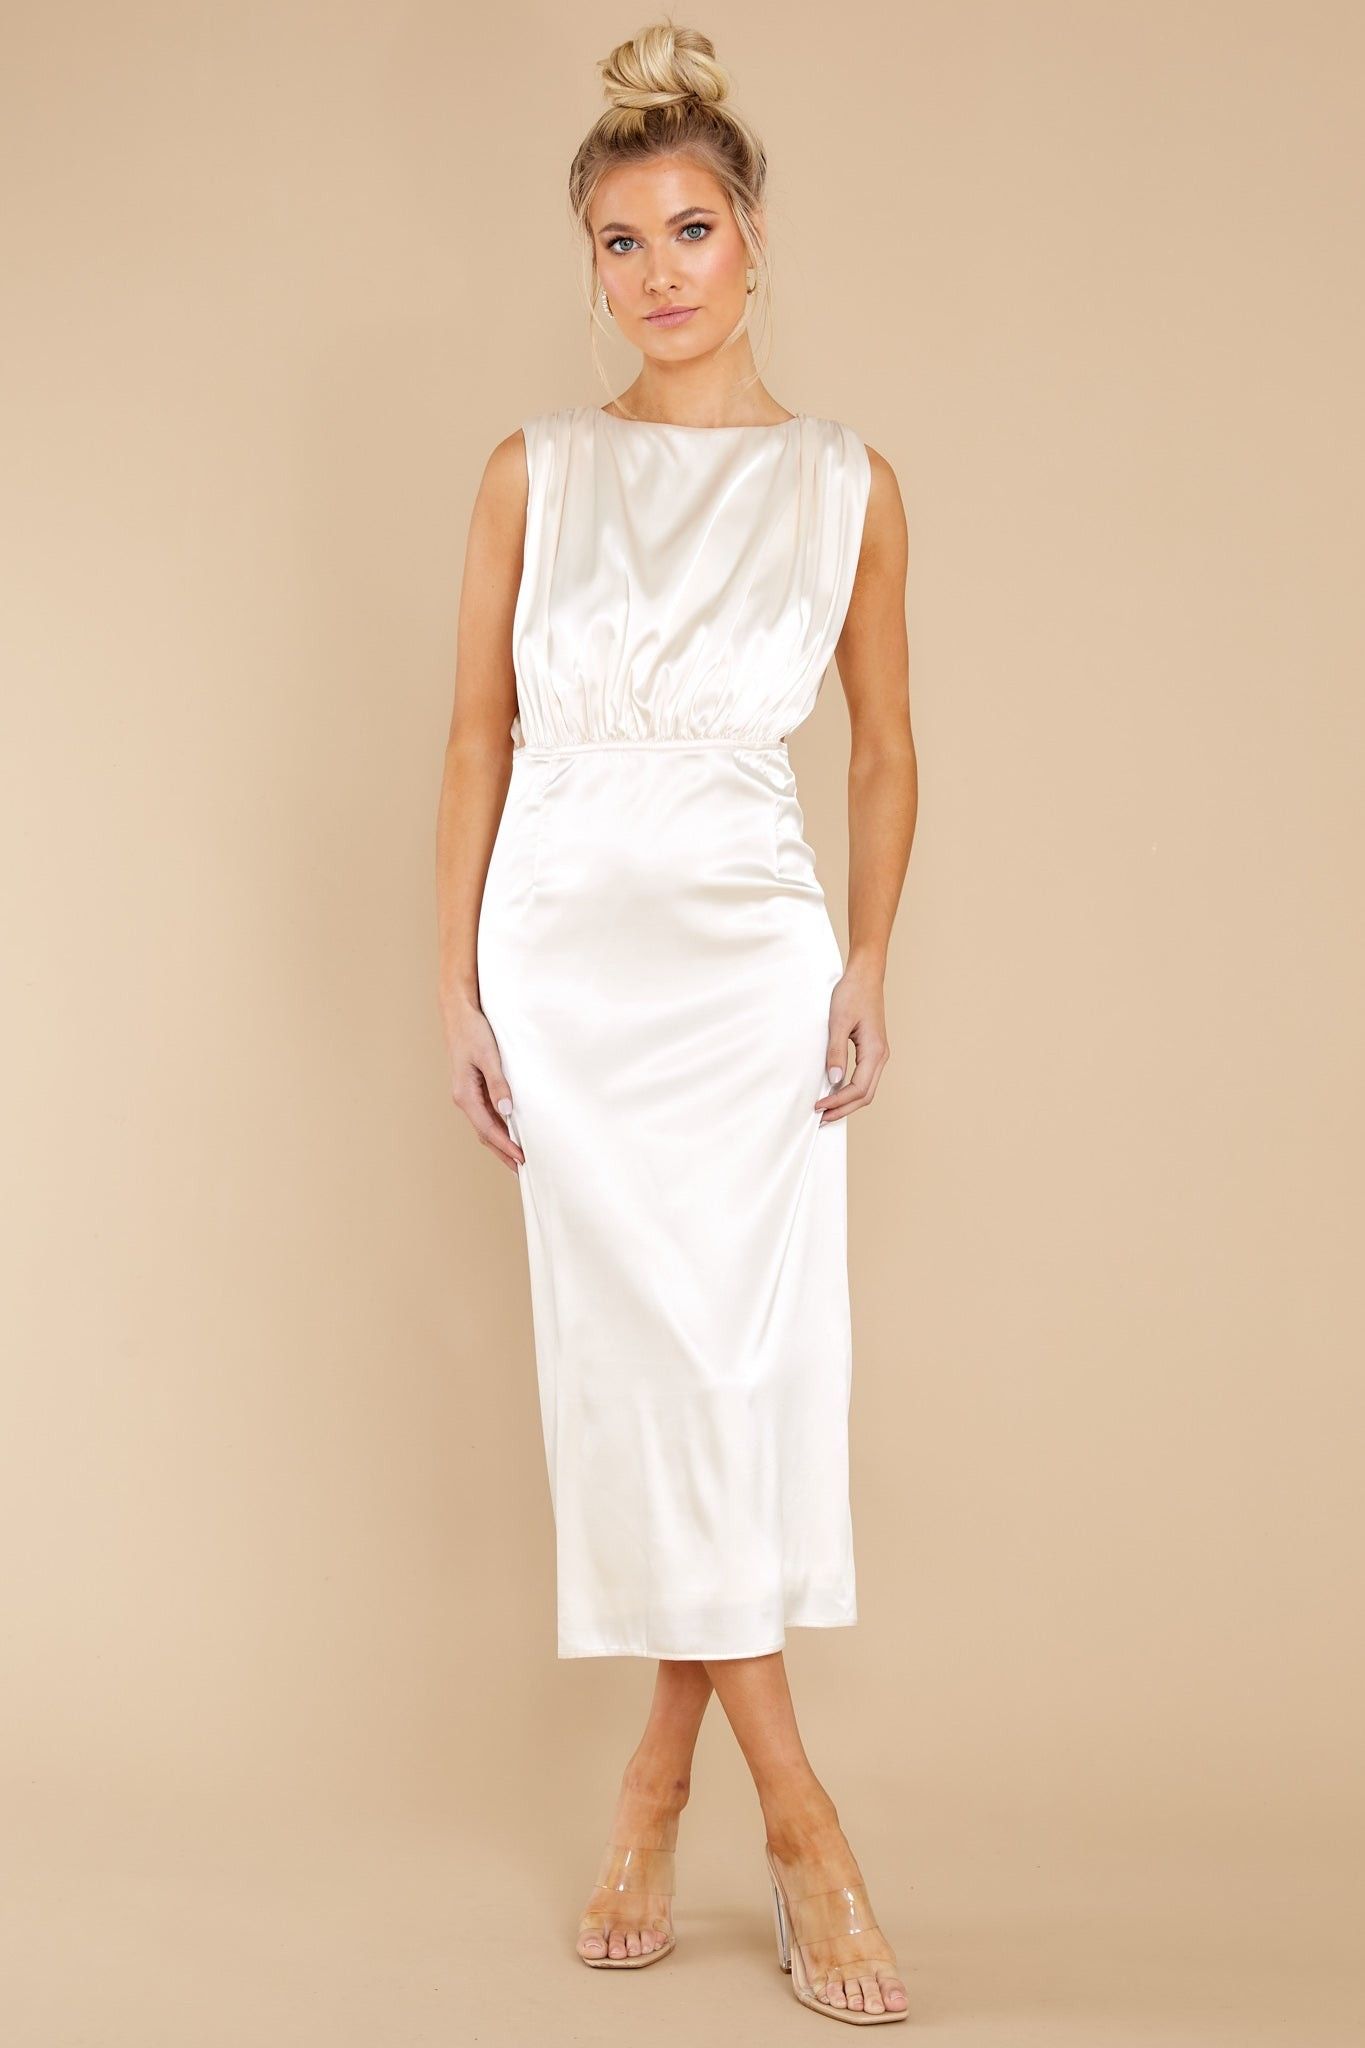 Elegant Nights Champagne Midi Dress - Bride To Be | Red Dress 